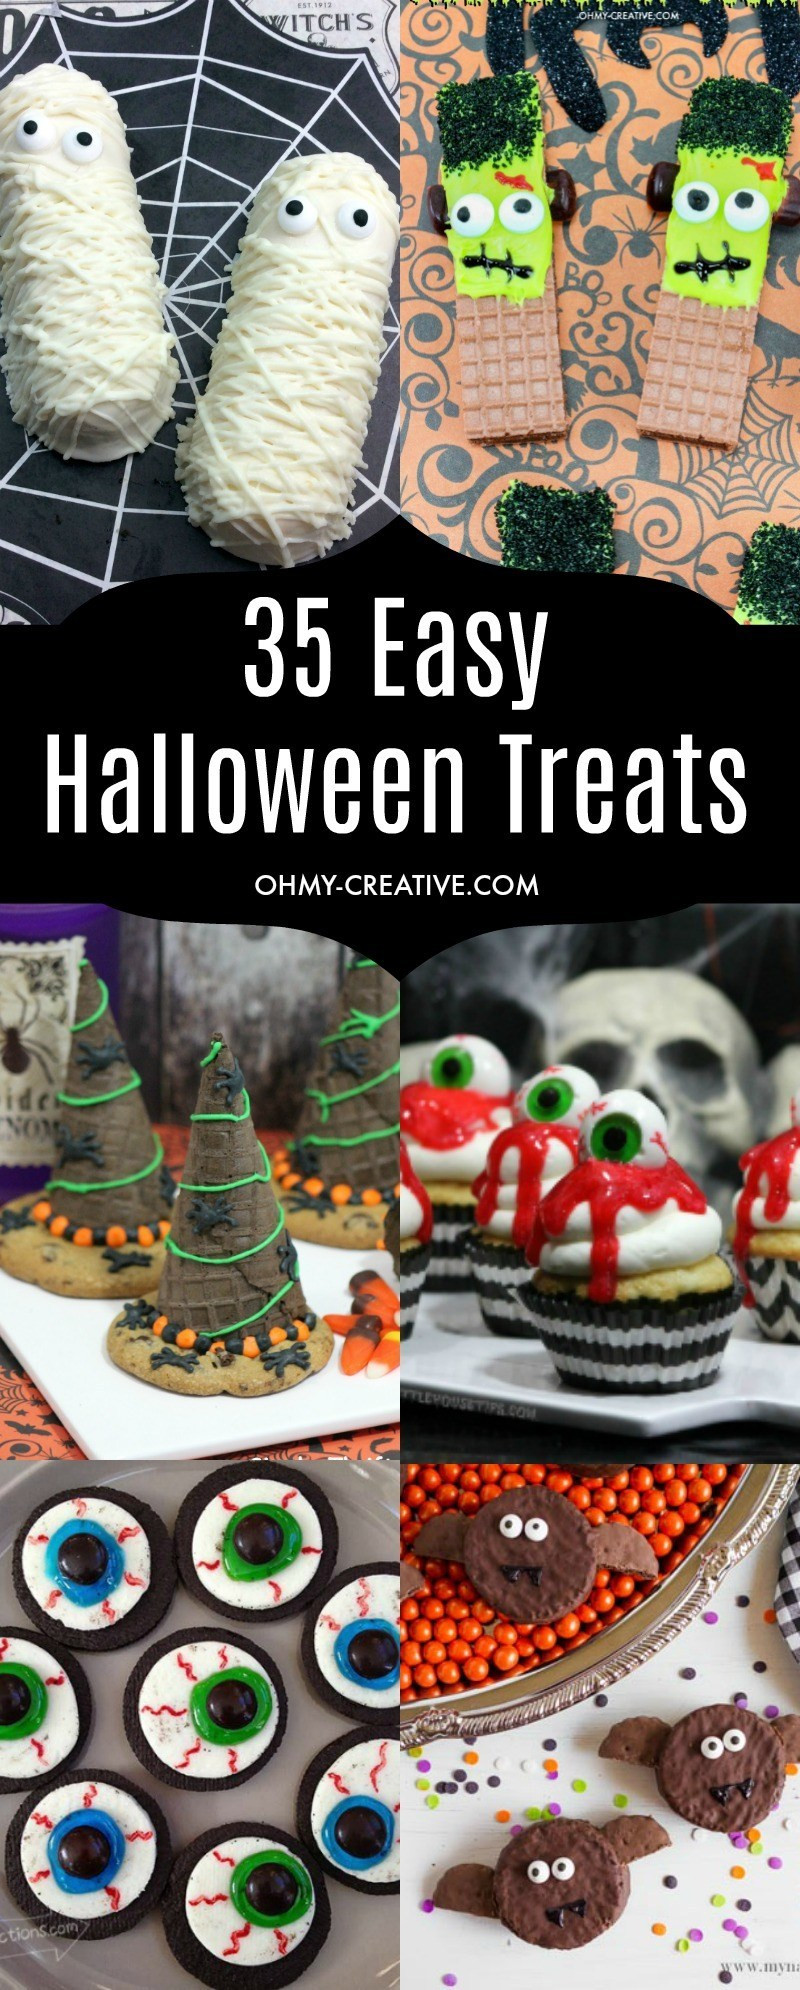 Creative Halloween Desserts
 Easy Halloween Treats To Make Oh My Creative